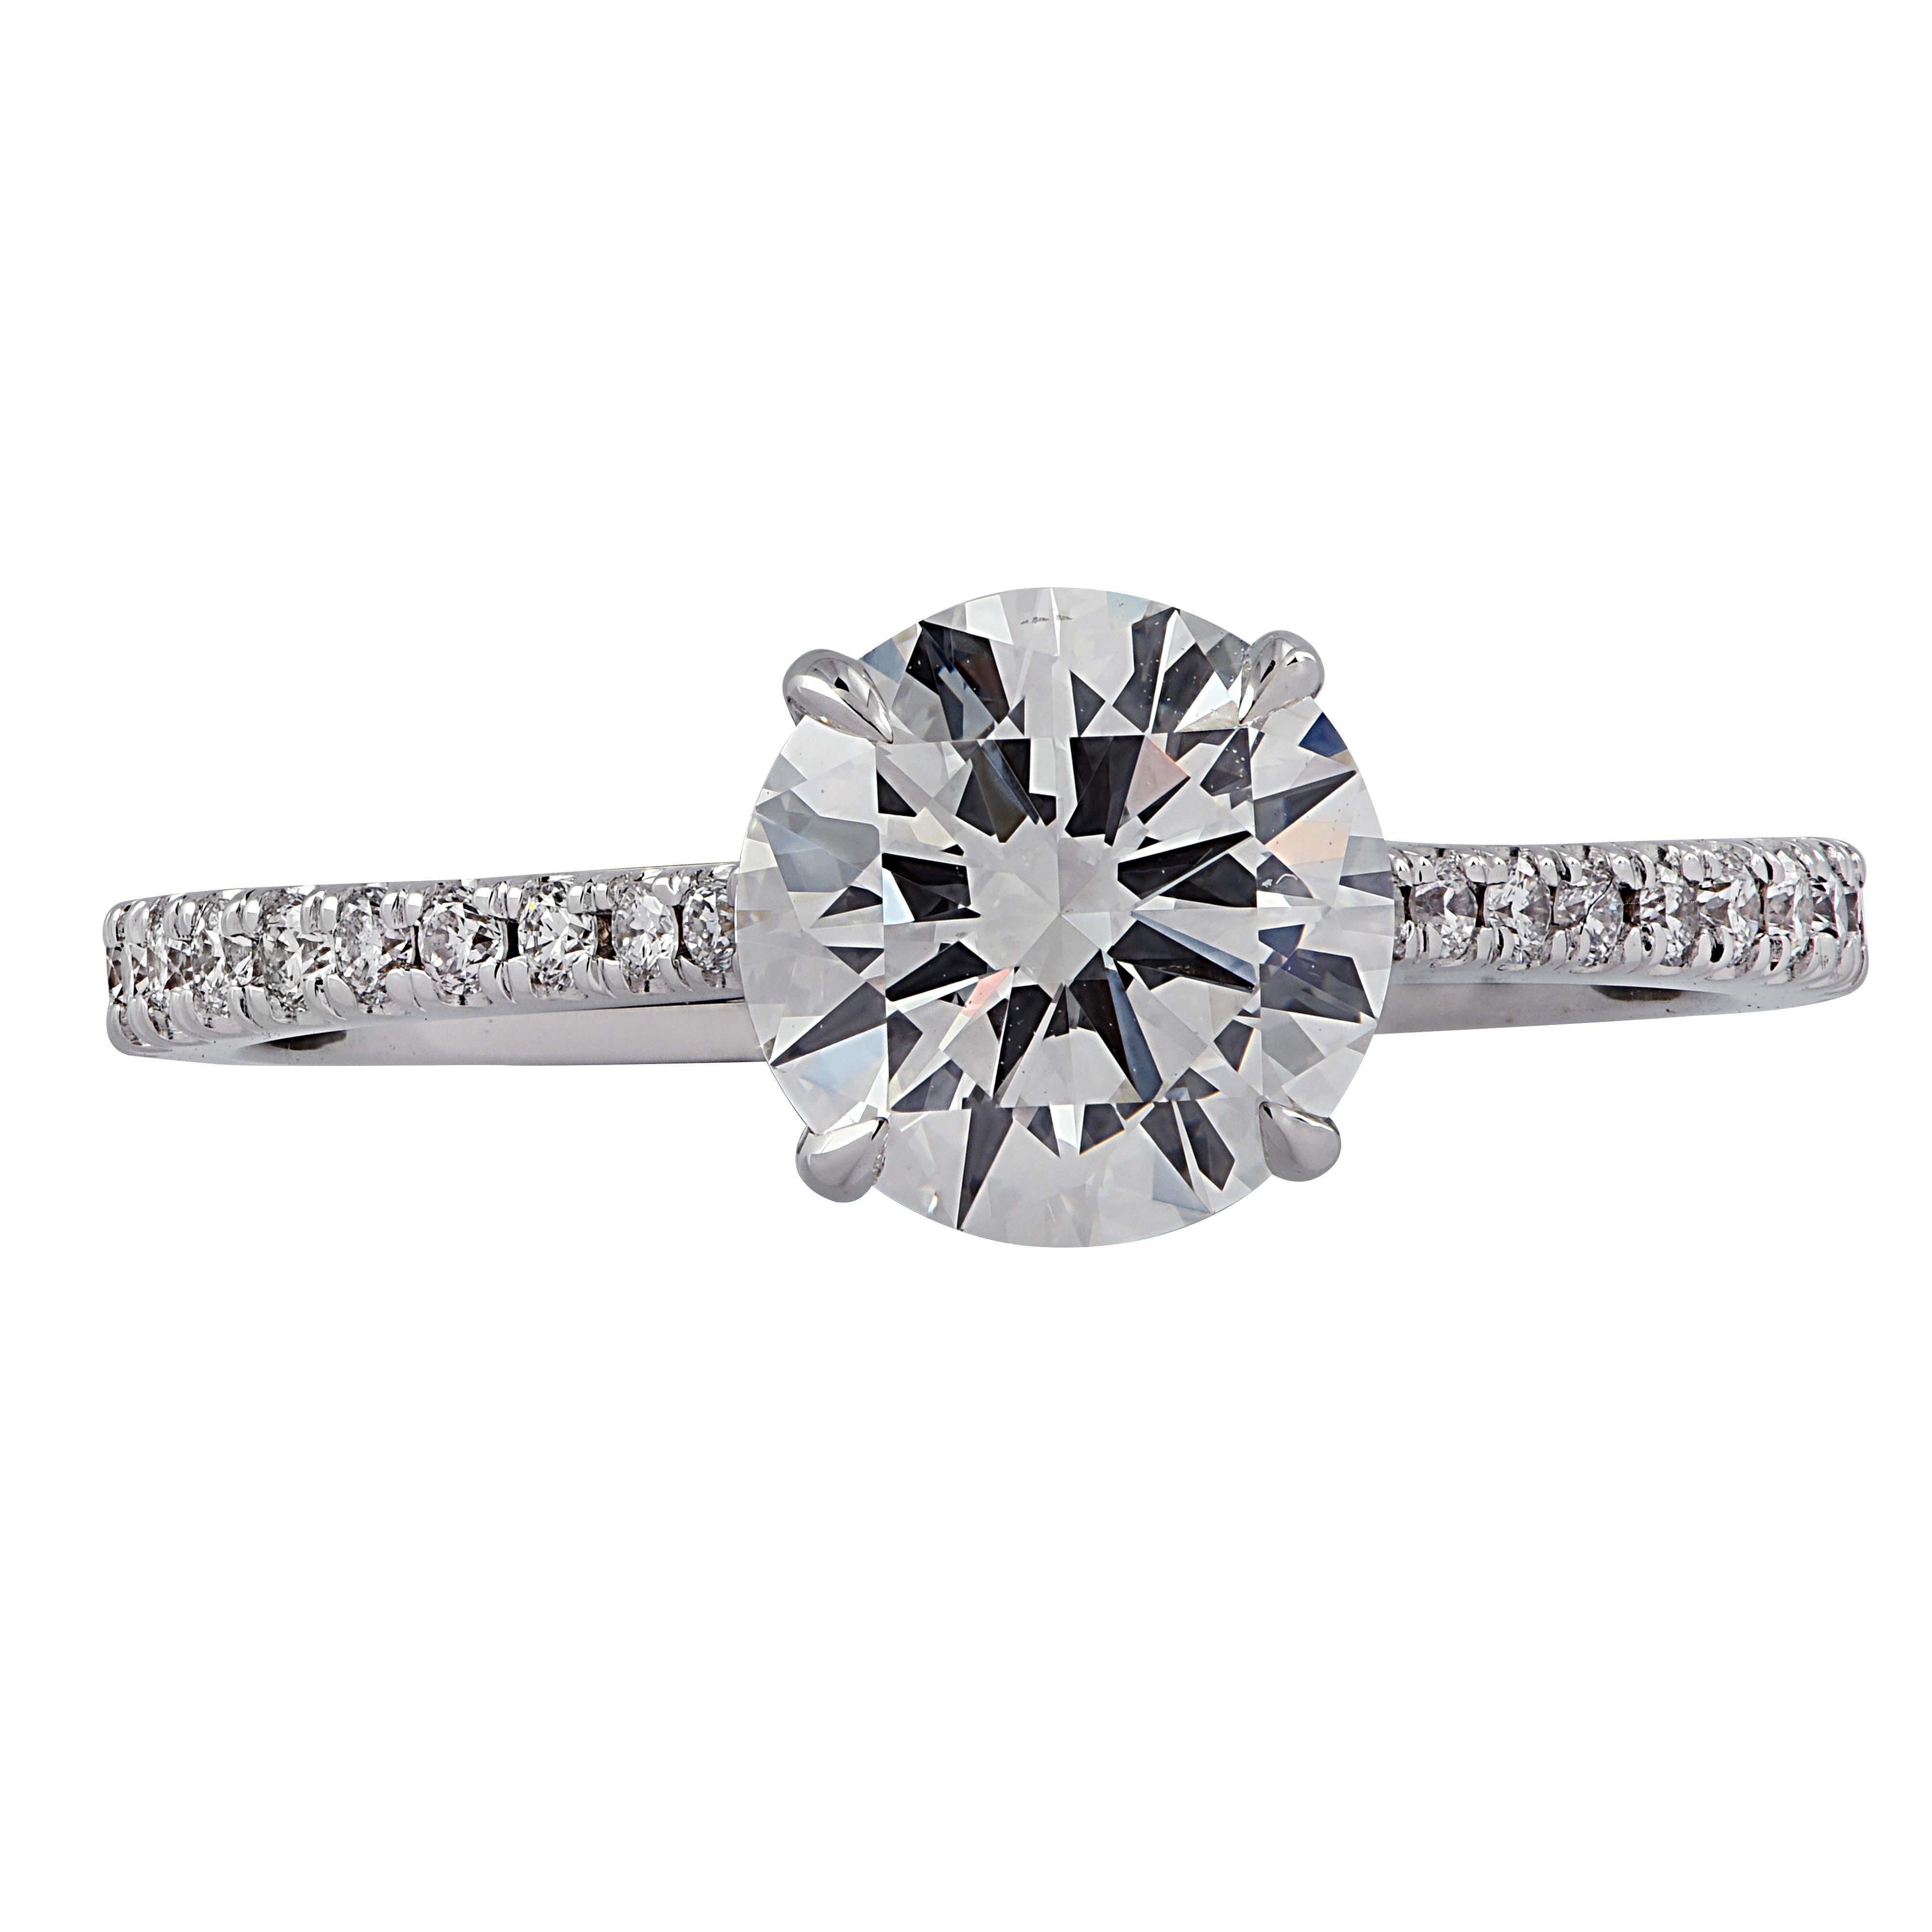 Round Cut Vivid Diamonds GIA Certified 1.38 Carat Diamond Engagement Ring